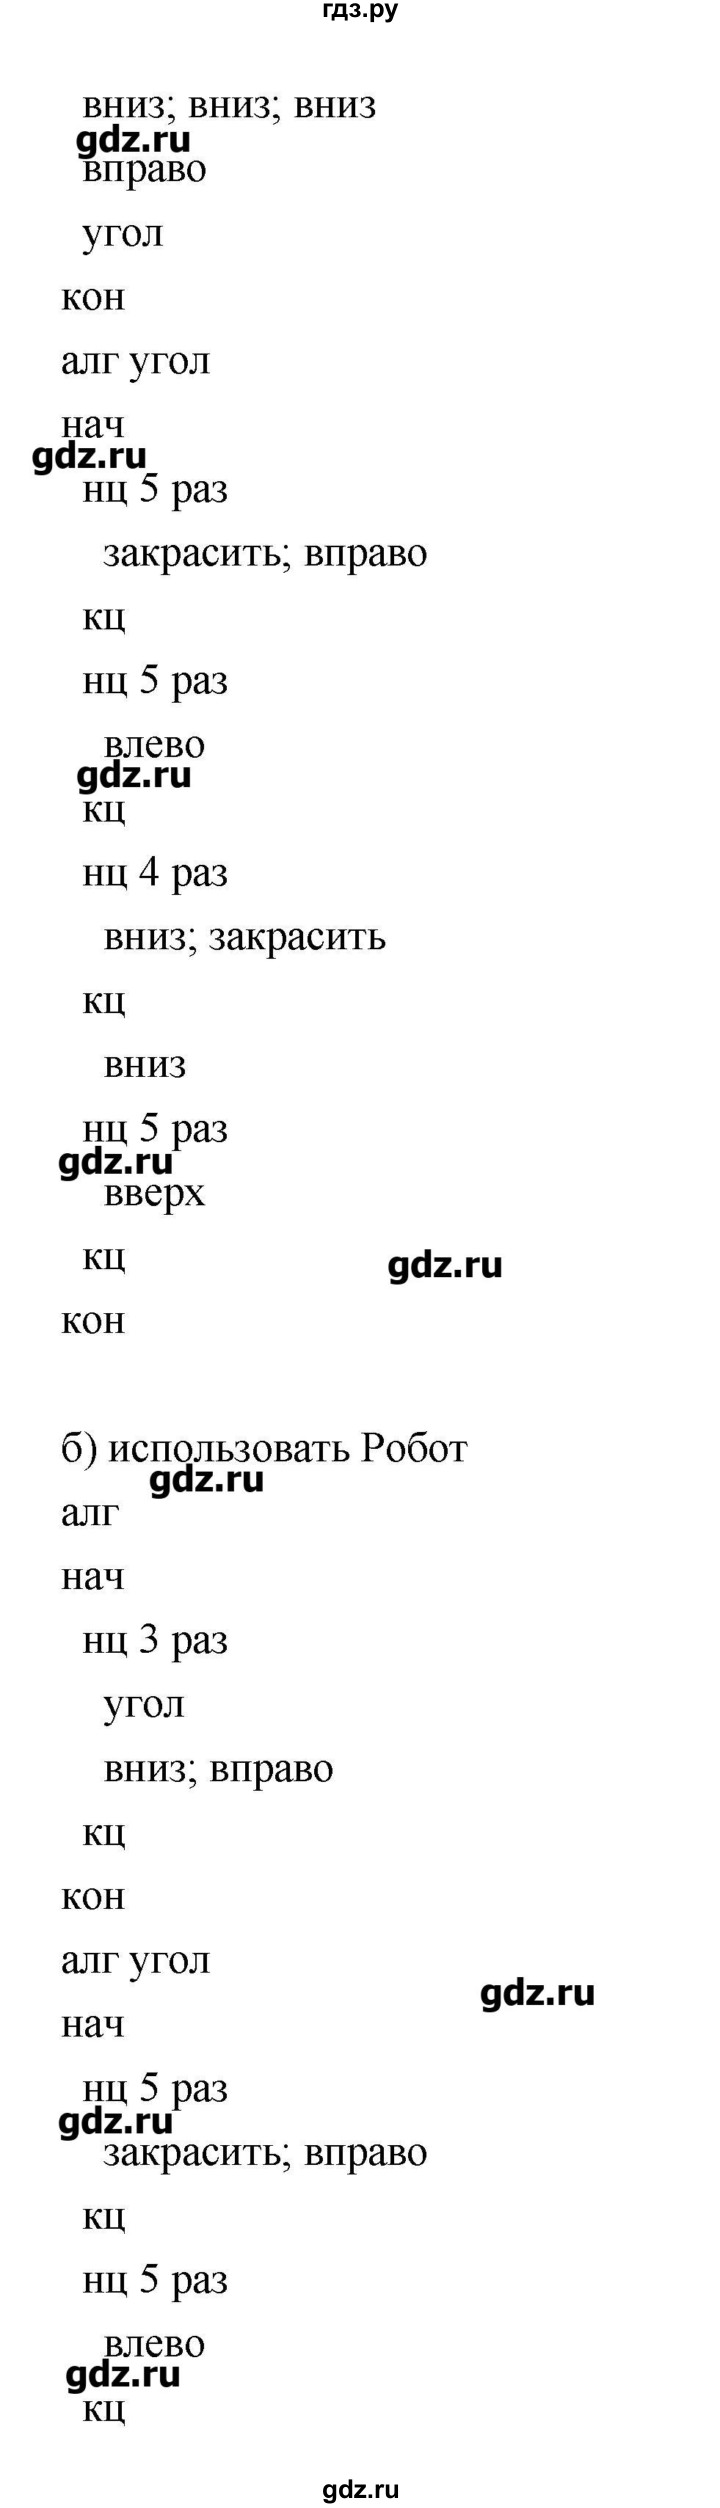 ГДЗ по информатике 9 класс Босова   страница - 87-88, Решебник